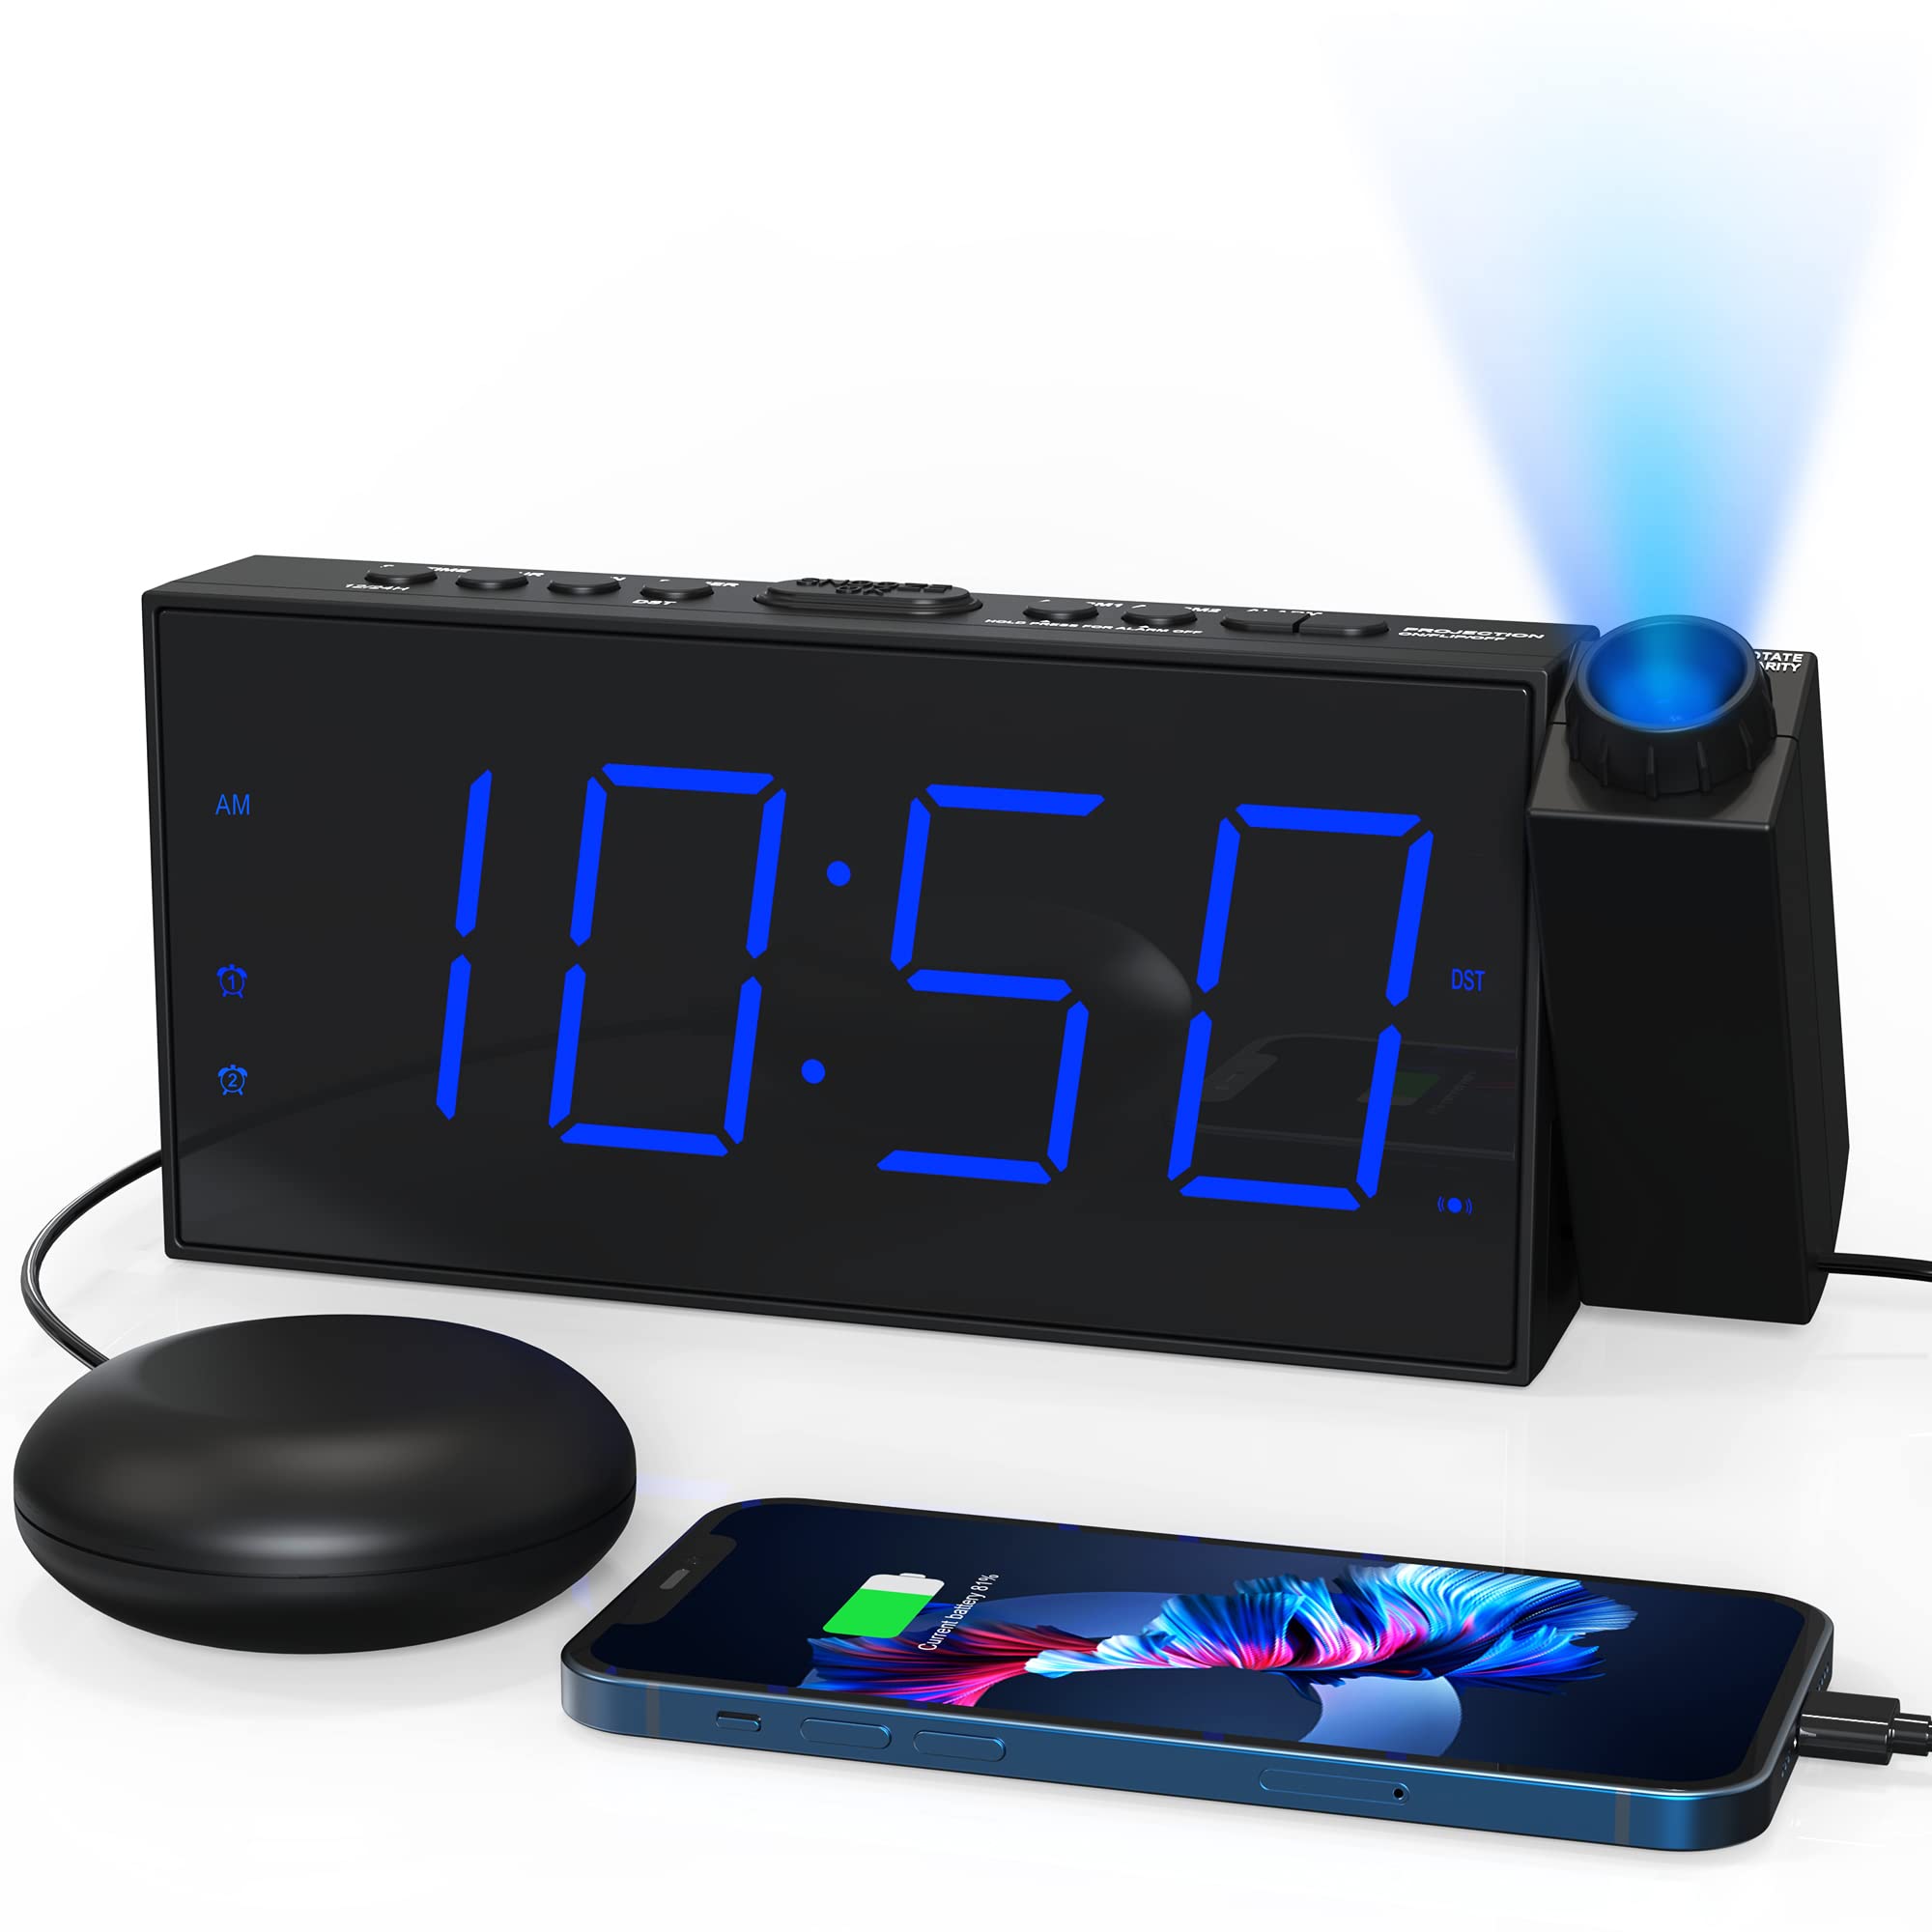 Mesqool Projection Alarm Clock